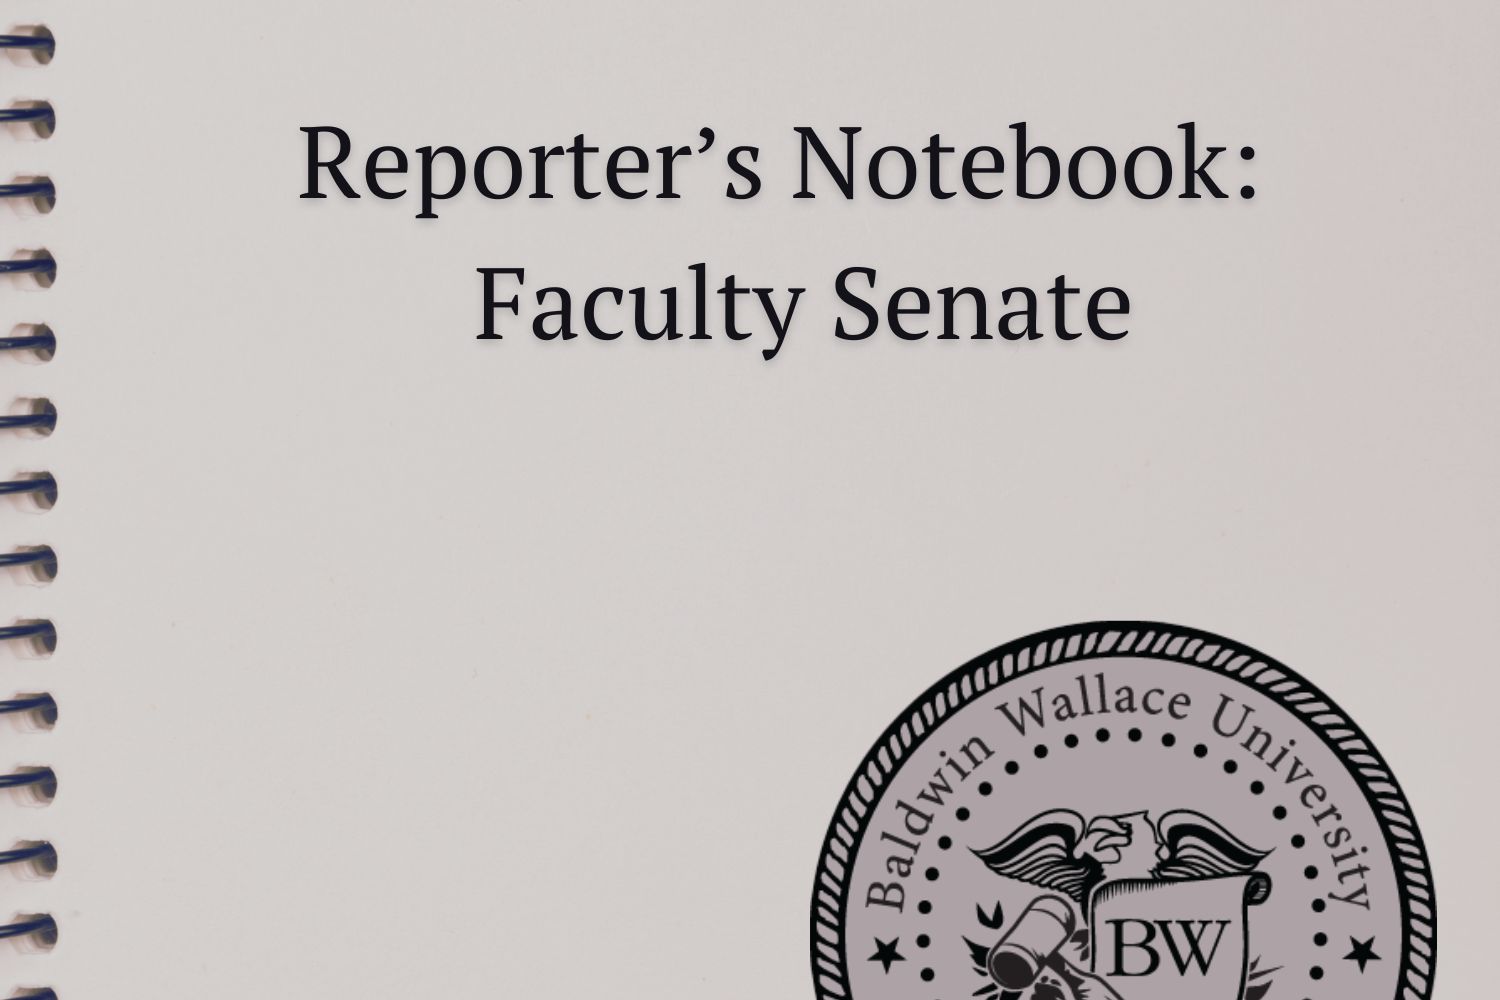 Reporters Notebook: Faculty Senate